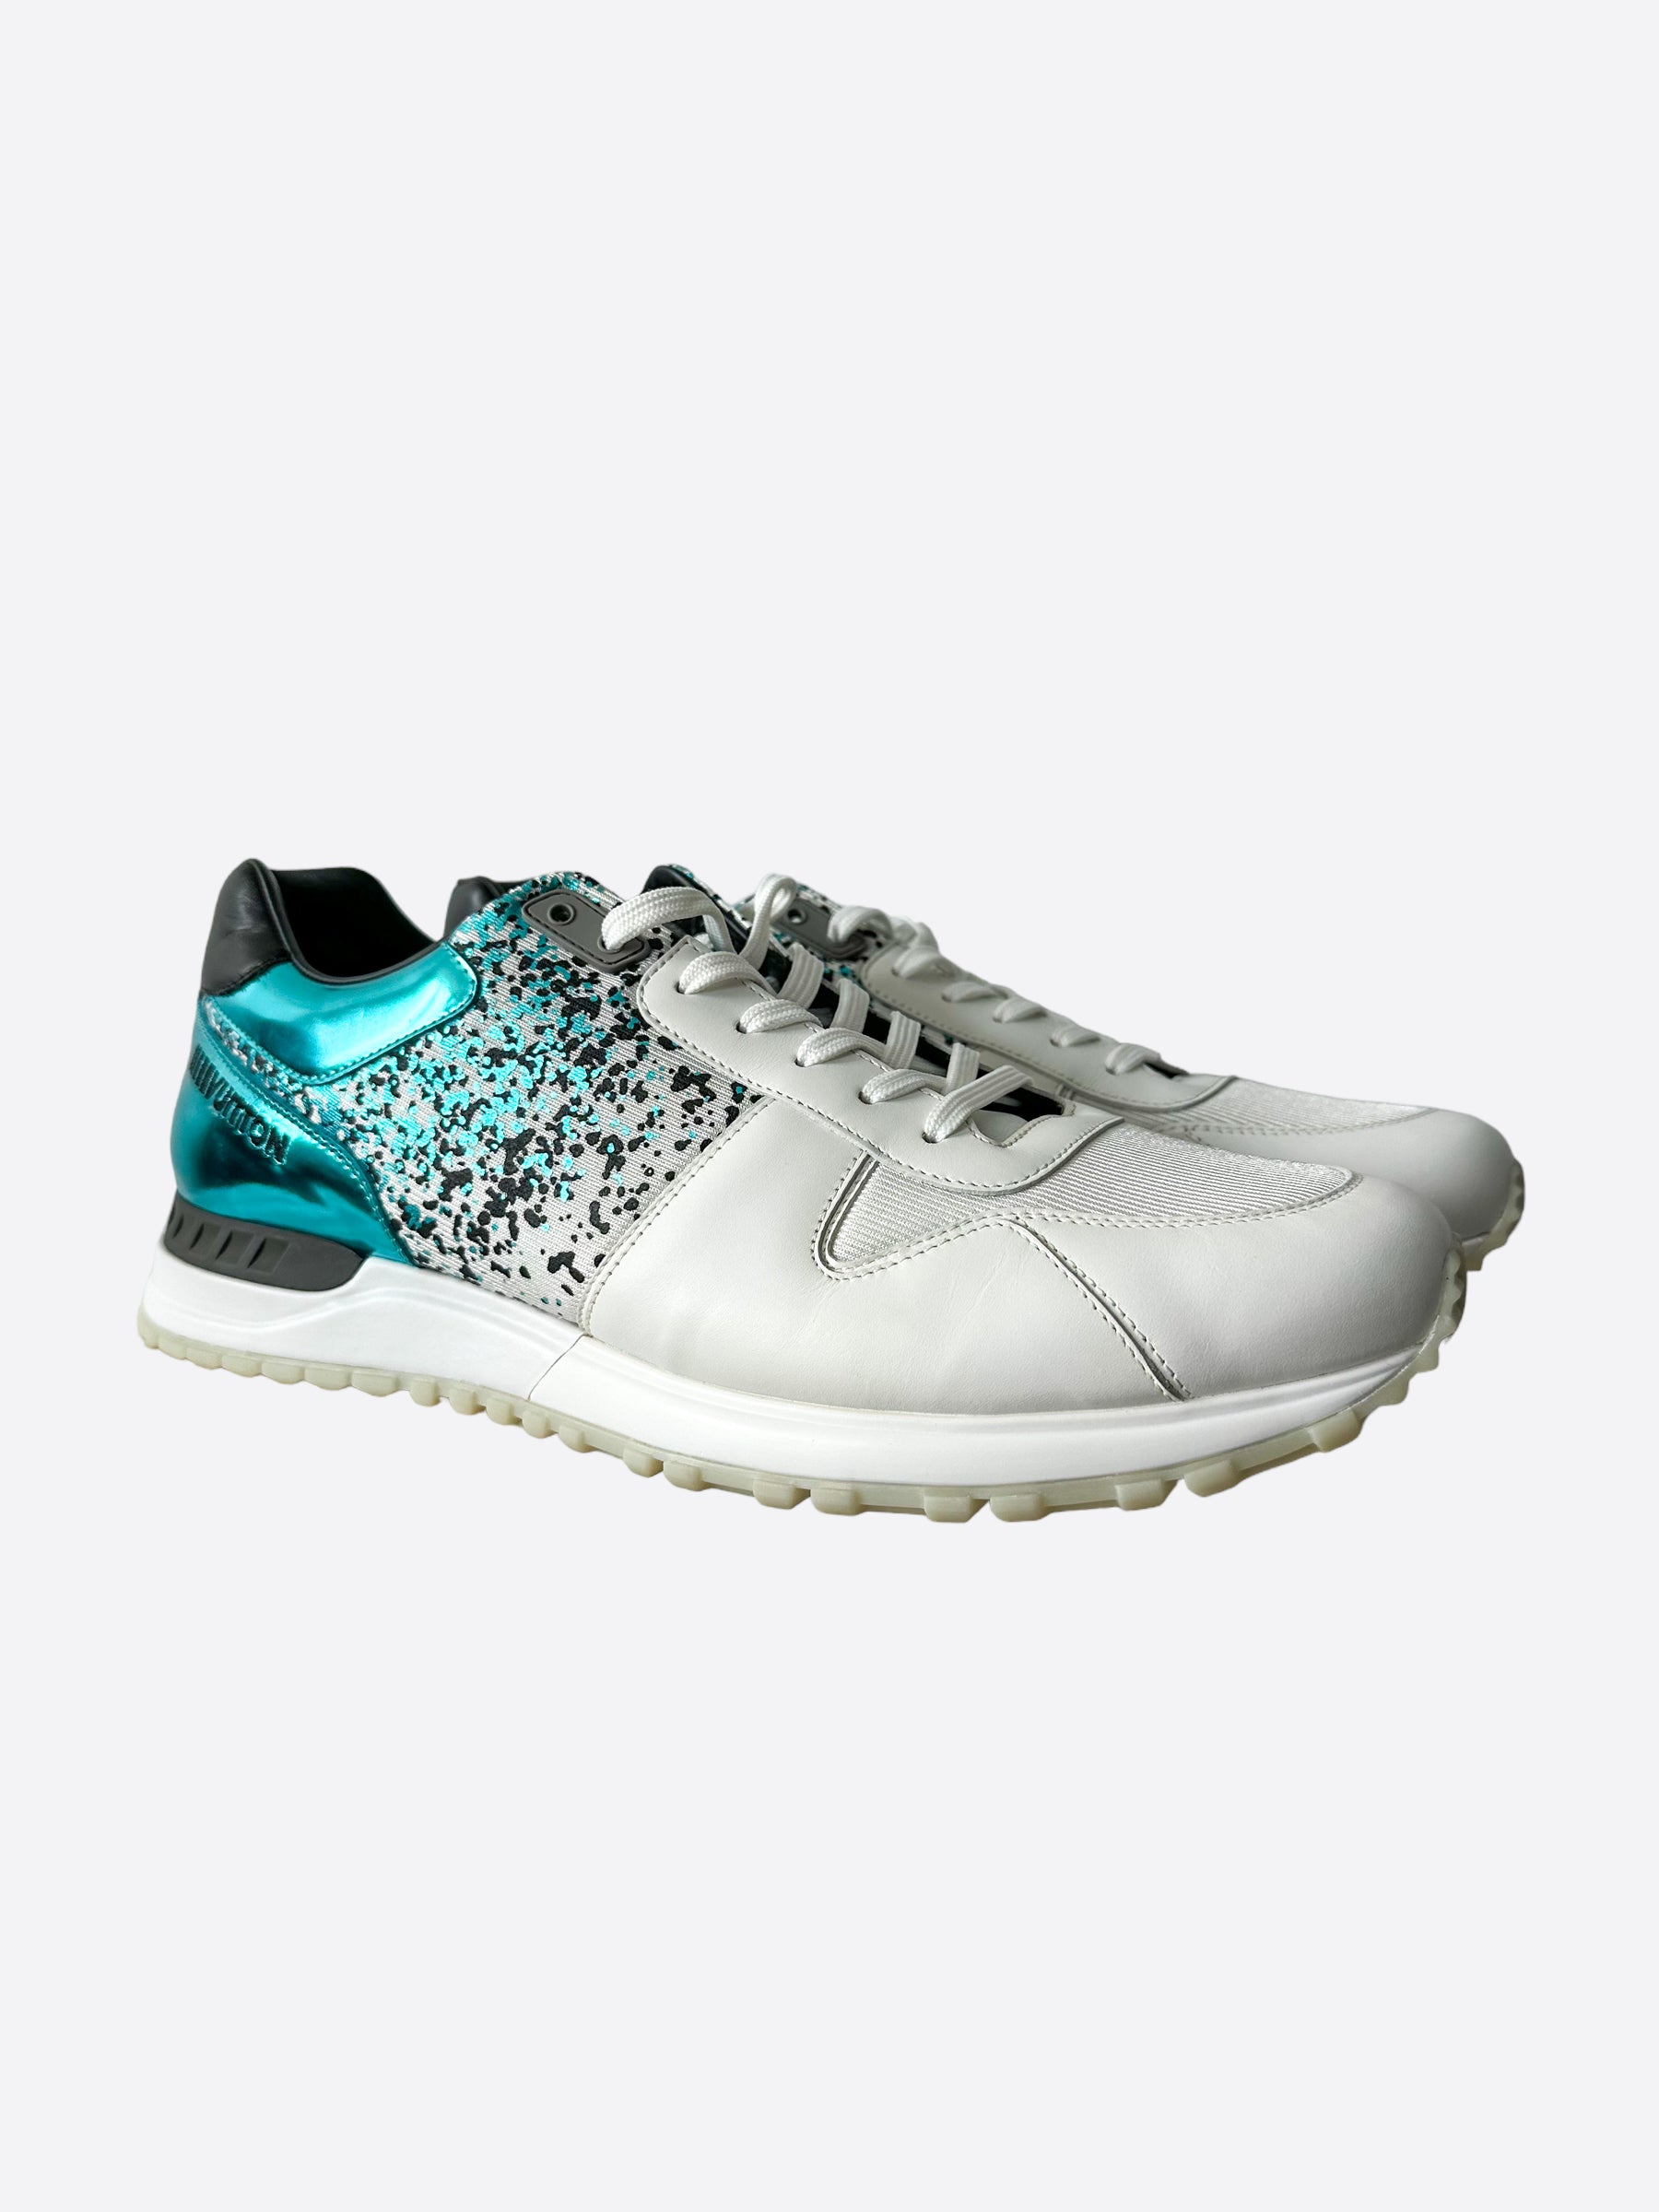 Louis Vuitton Turquoise & White Runaway Sneaker